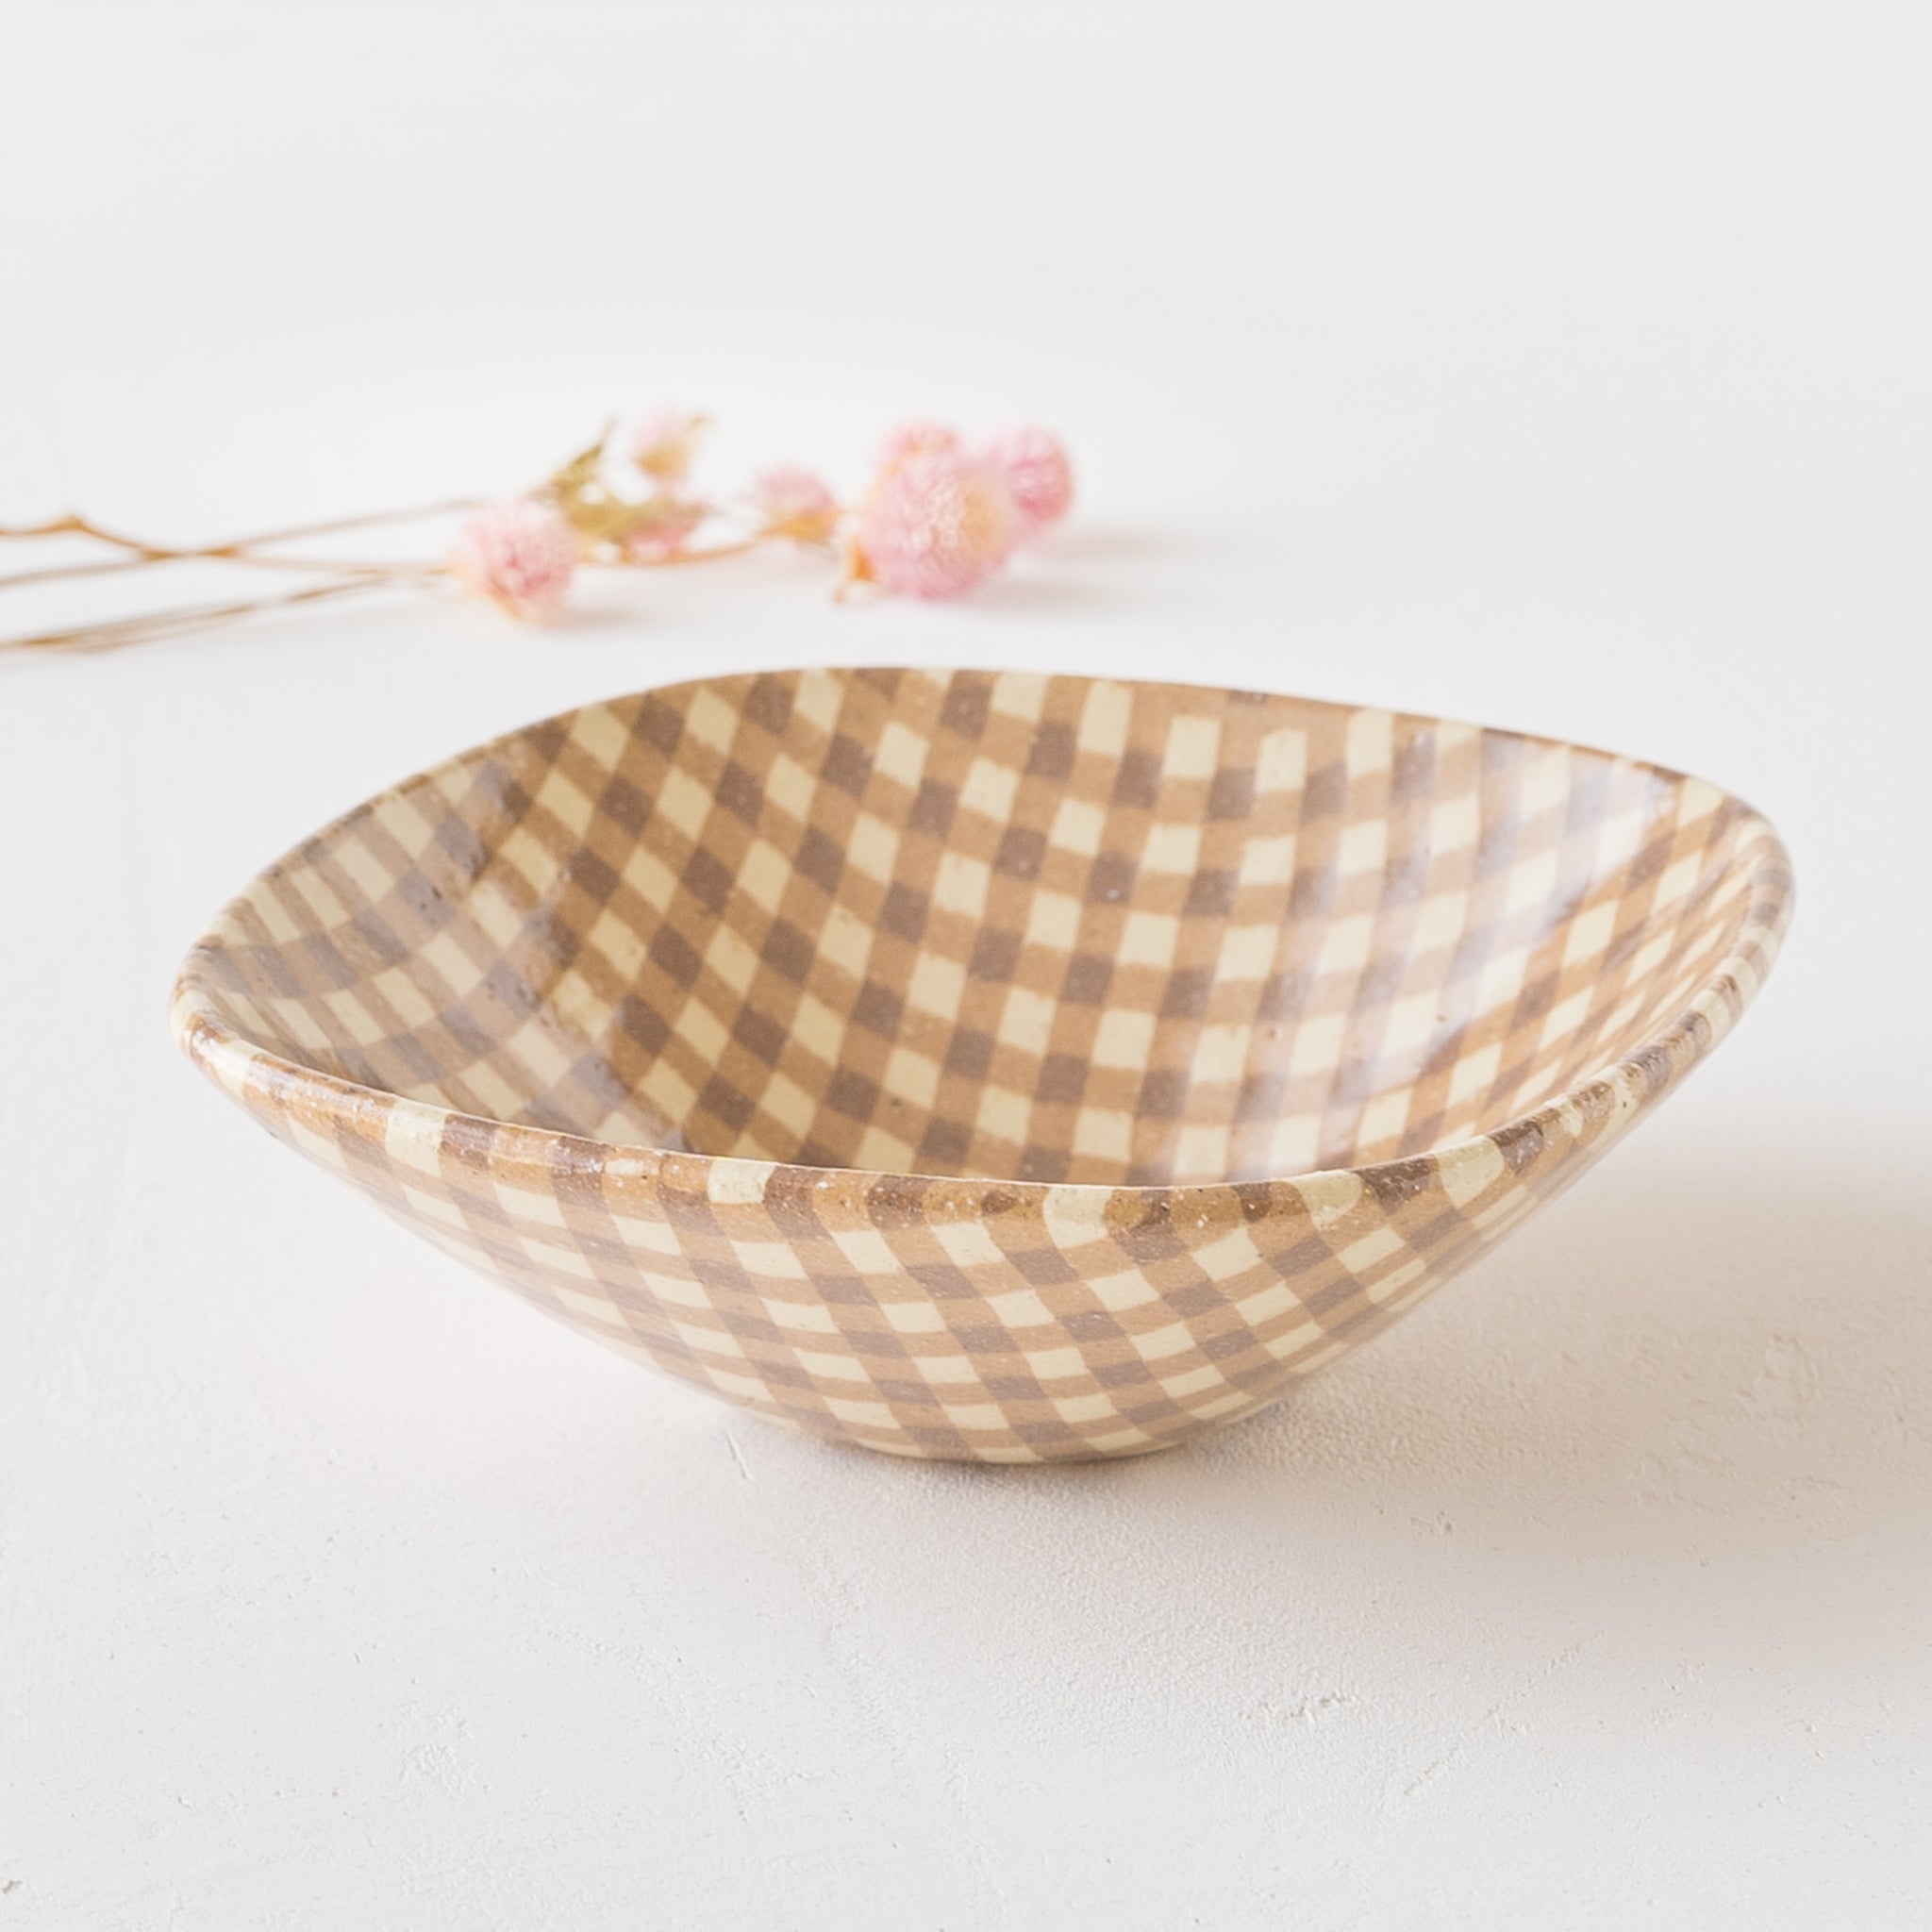 Hanako Sakashita's corner bowl with a cute kneaded pattern